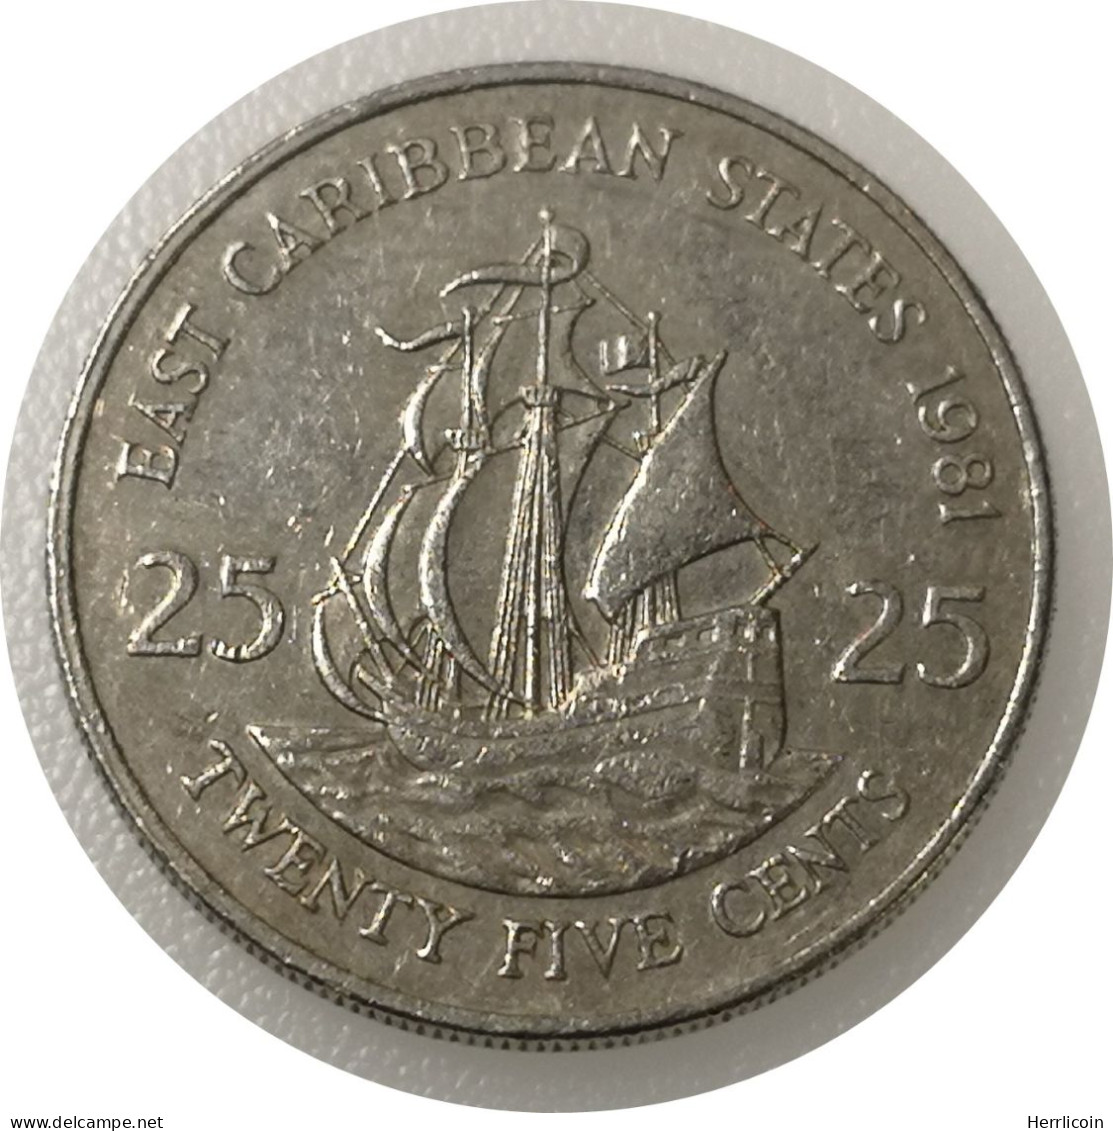 Monnaie Caraïbes - 1981 - 25 Cents Elizabeth II 2e Effigie - Britse-karibisher Territorien